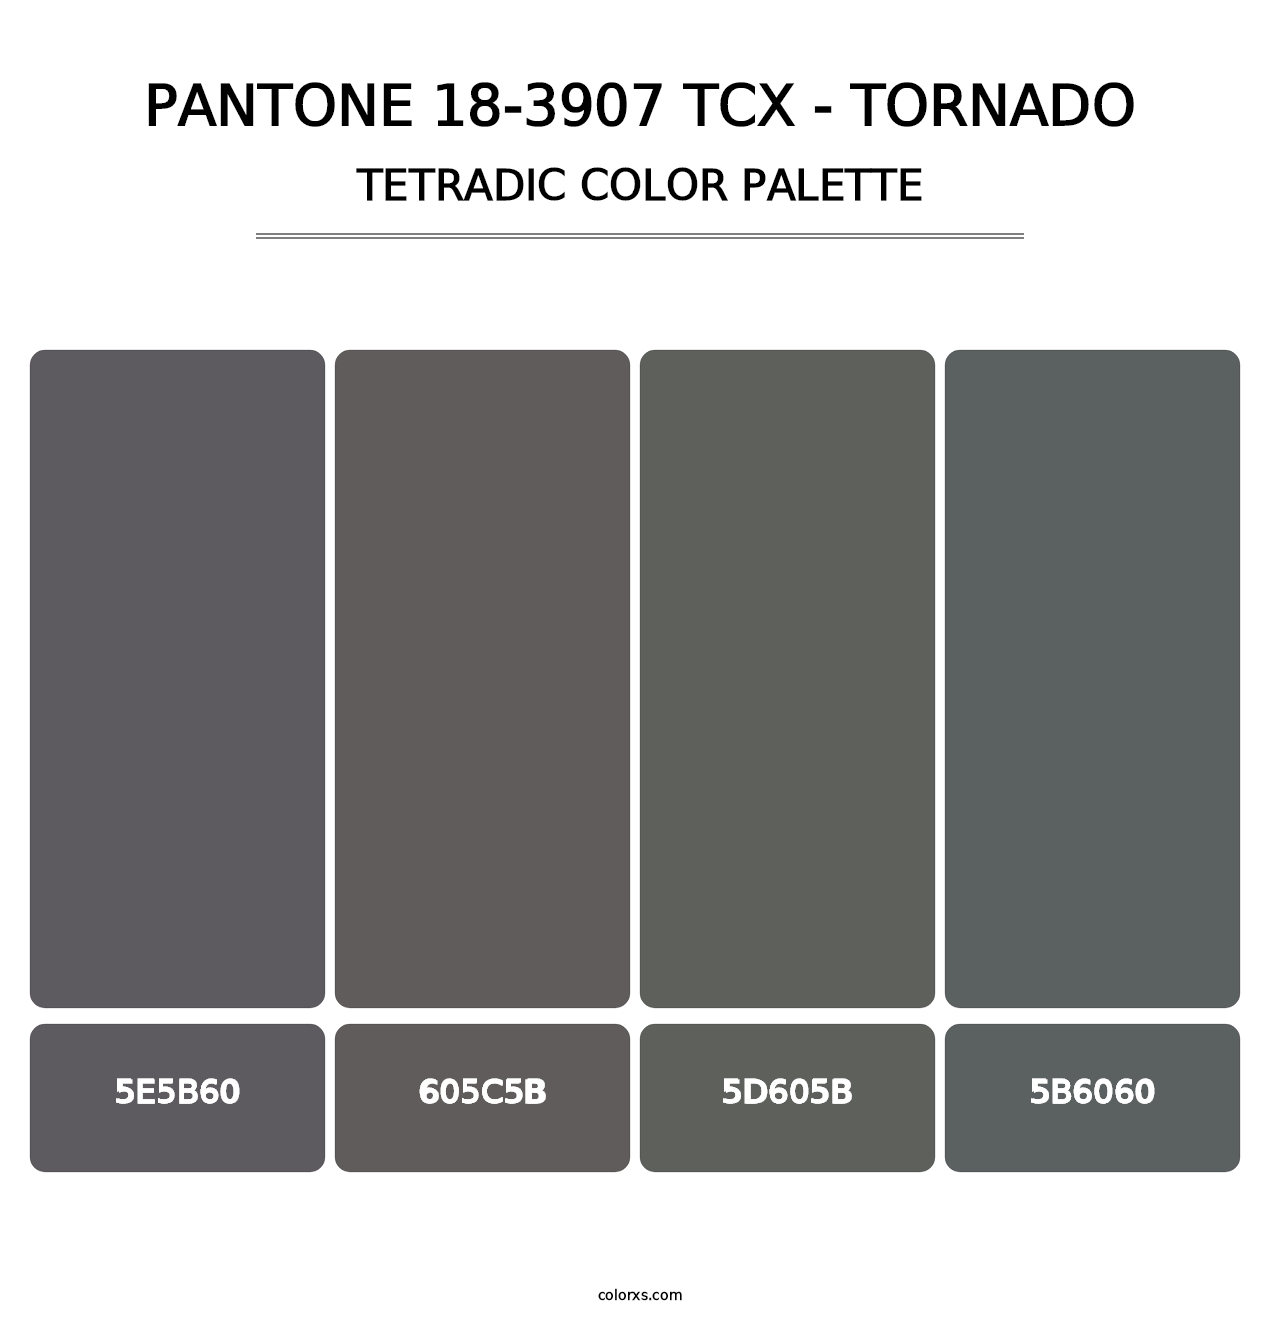 PANTONE 18-3907 TCX - Tornado - Tetradic Color Palette